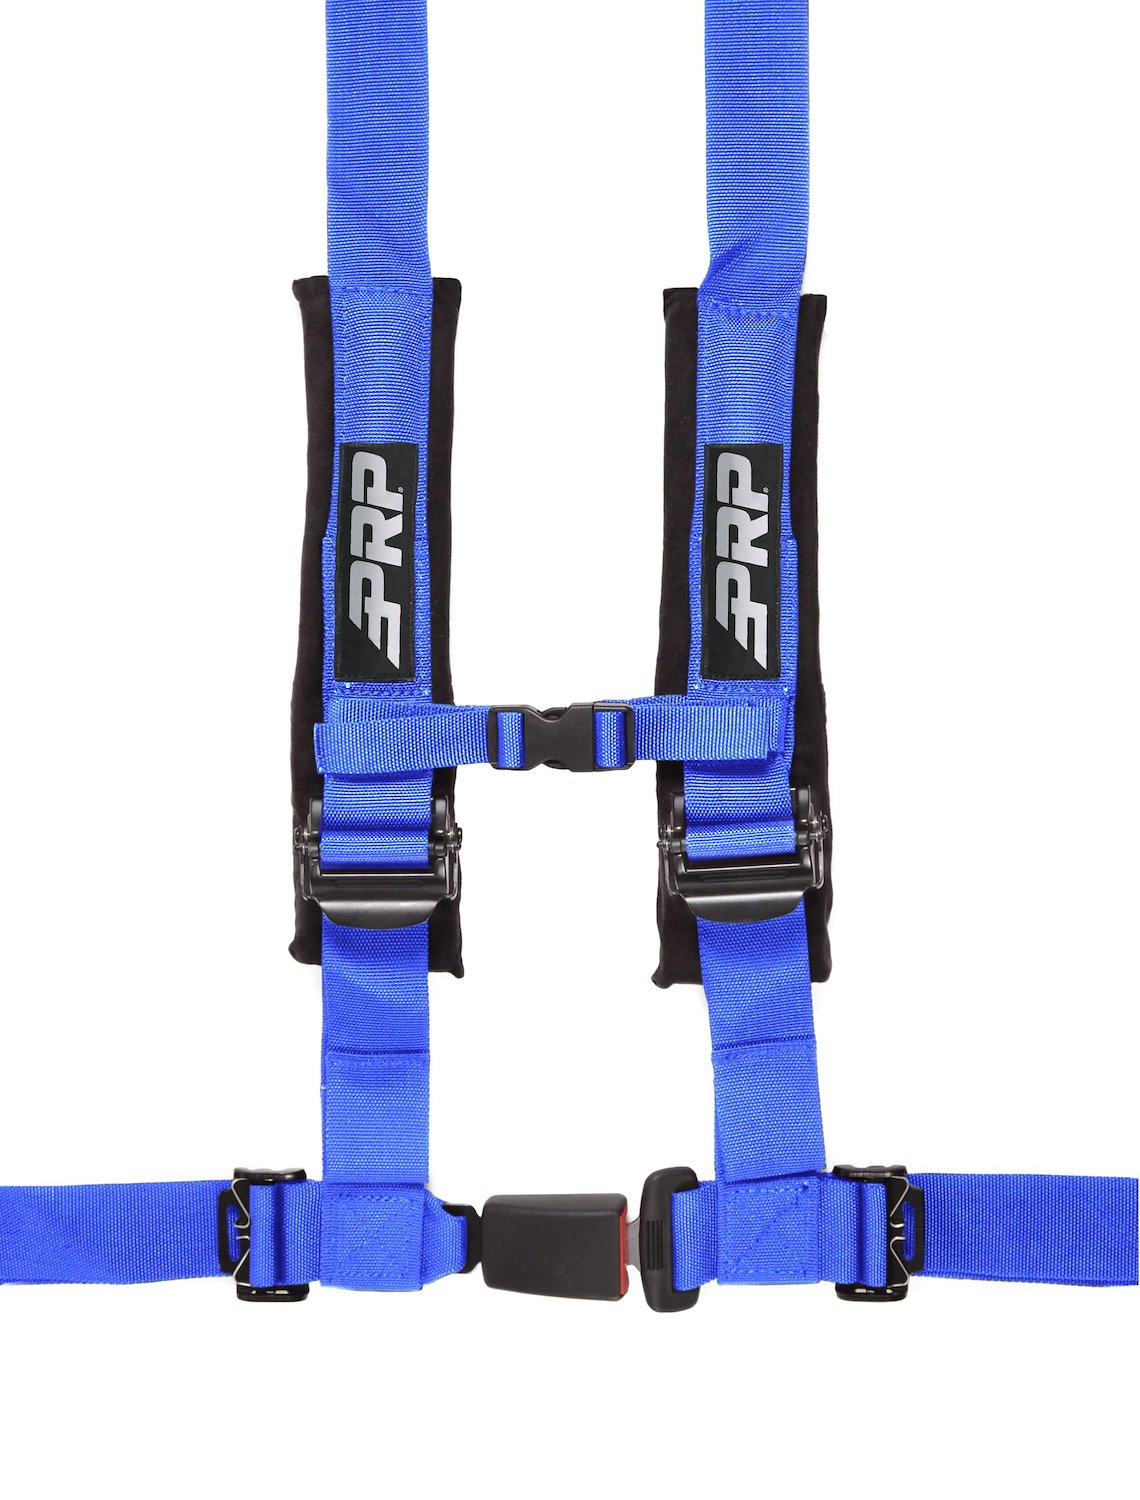 SBAUTO2B 4.2 Harness [Blue]